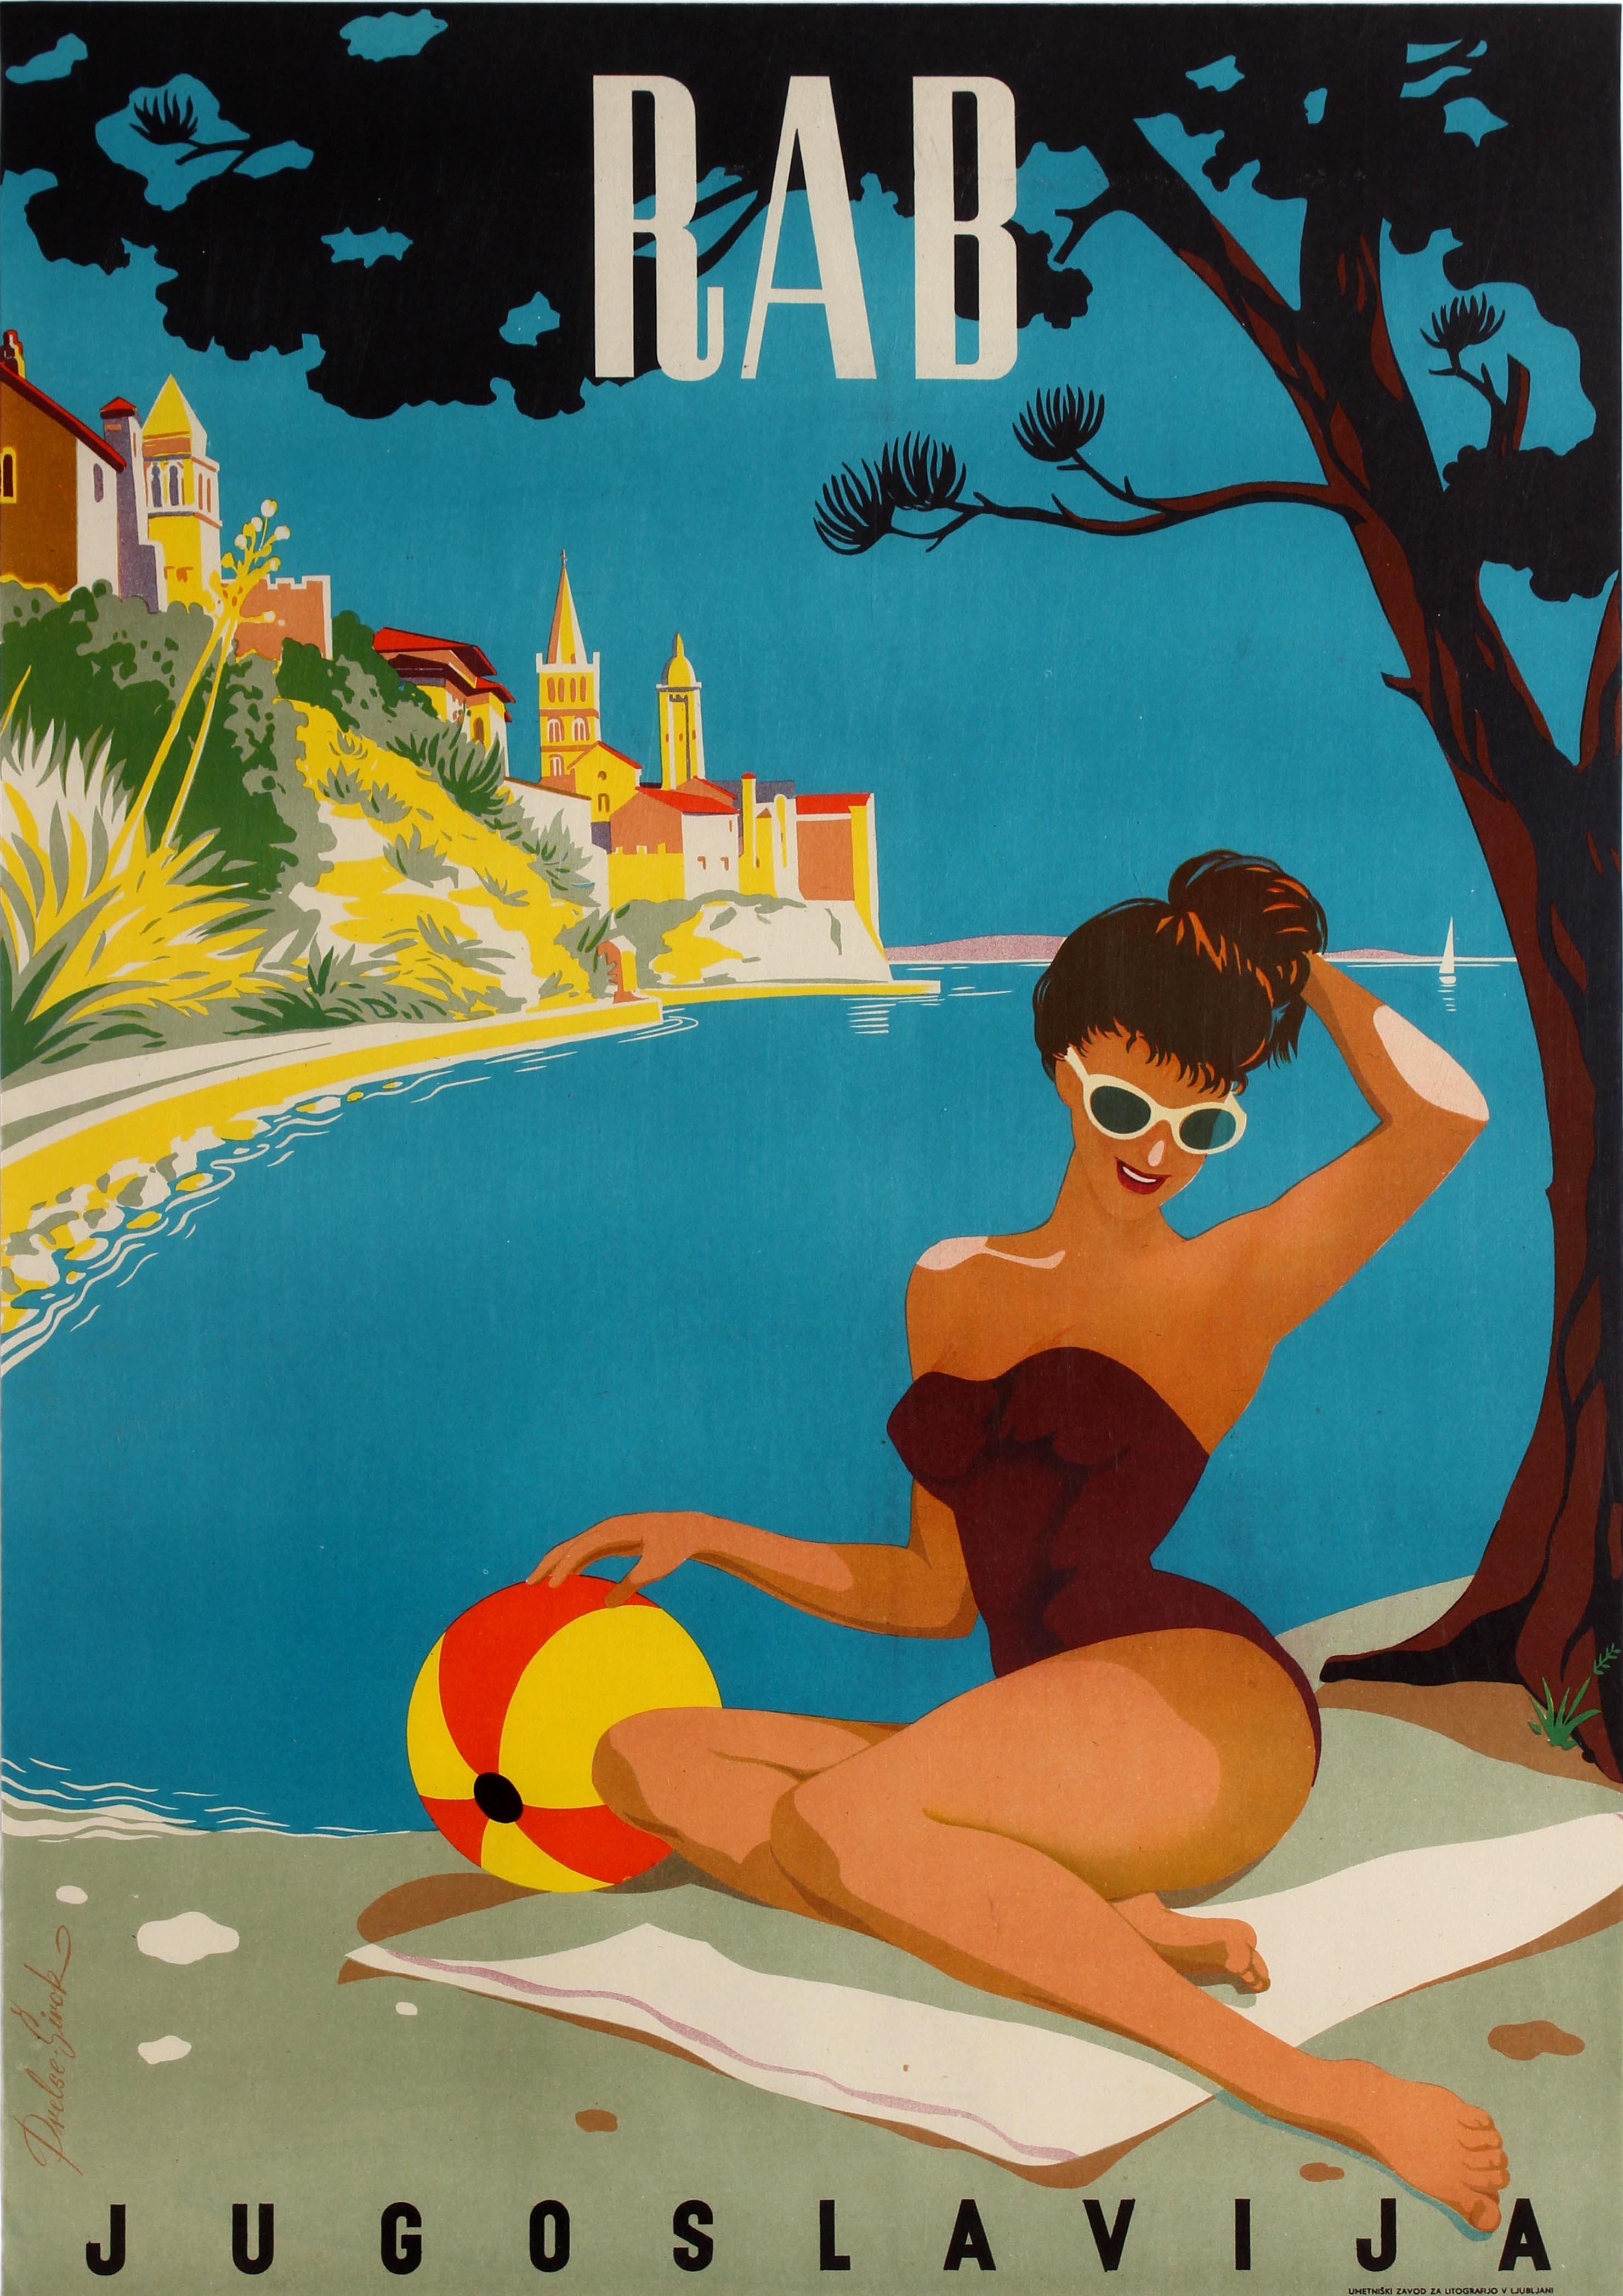 Unknown Print - Original Vintage Travel Poster Rab Jugoslavija Yugoslavia Croatia Adriatic Sea